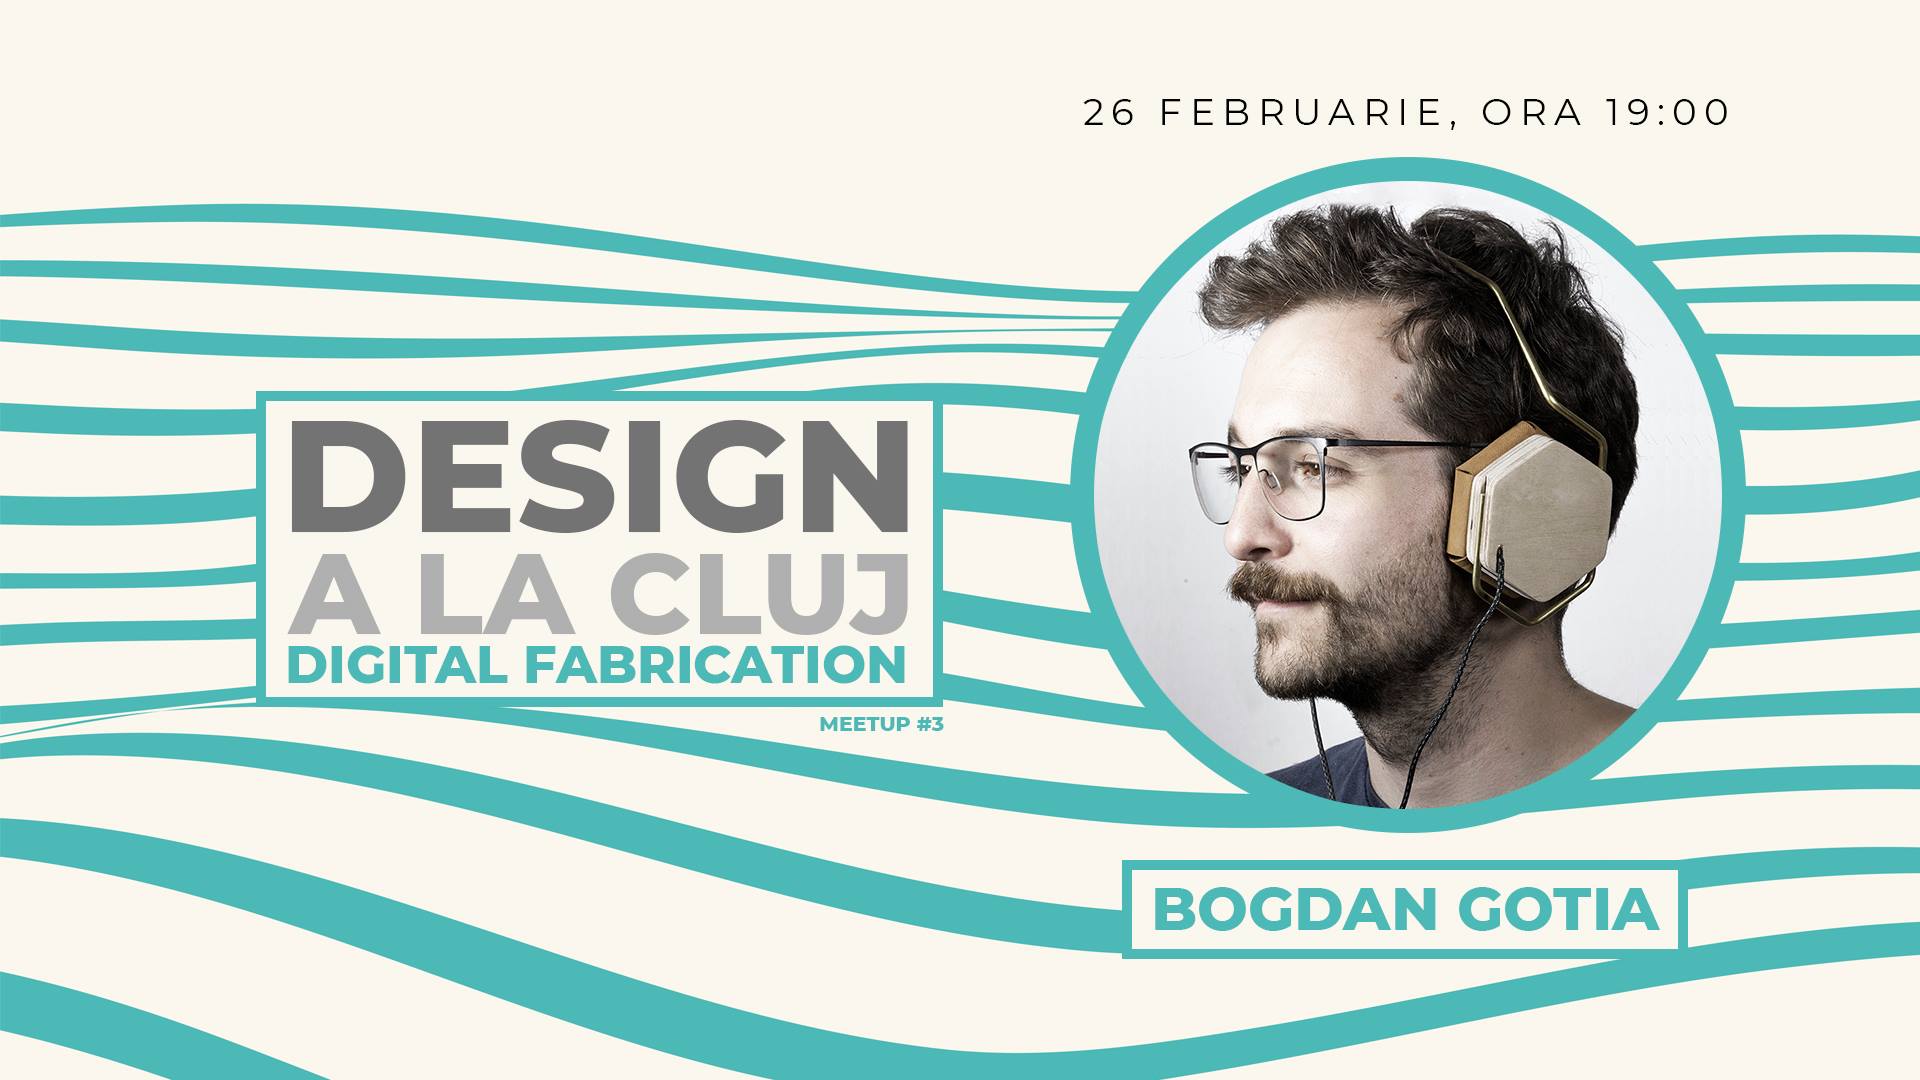 Design a la Cluj meetup #3 | Digital Fabrication